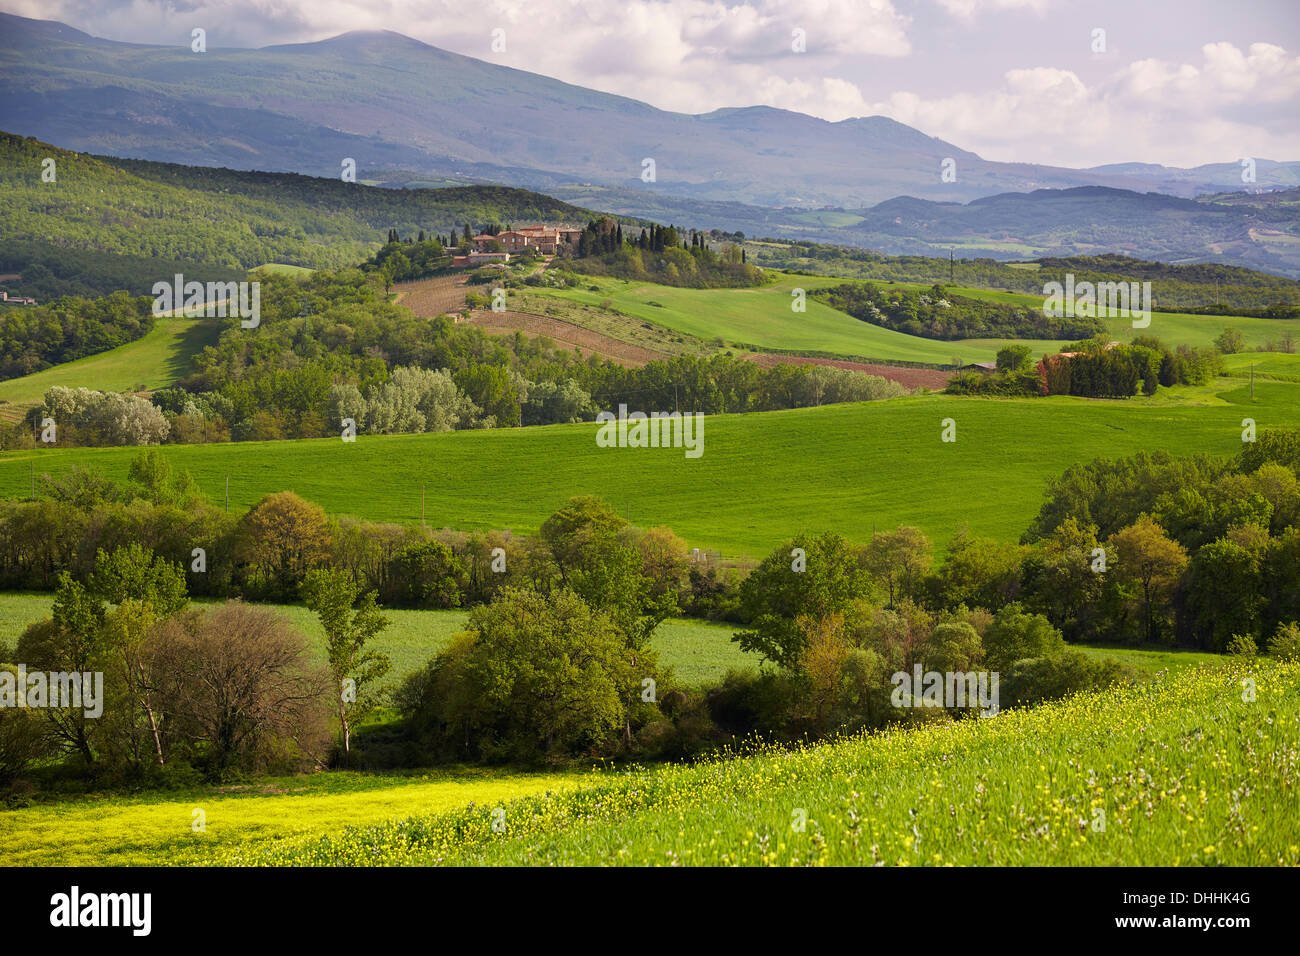 Hilly landscape of the Crete Senesi region, Torrenieri, Montalcino, Province of Siena, Tuscany, Italy Stock Photo